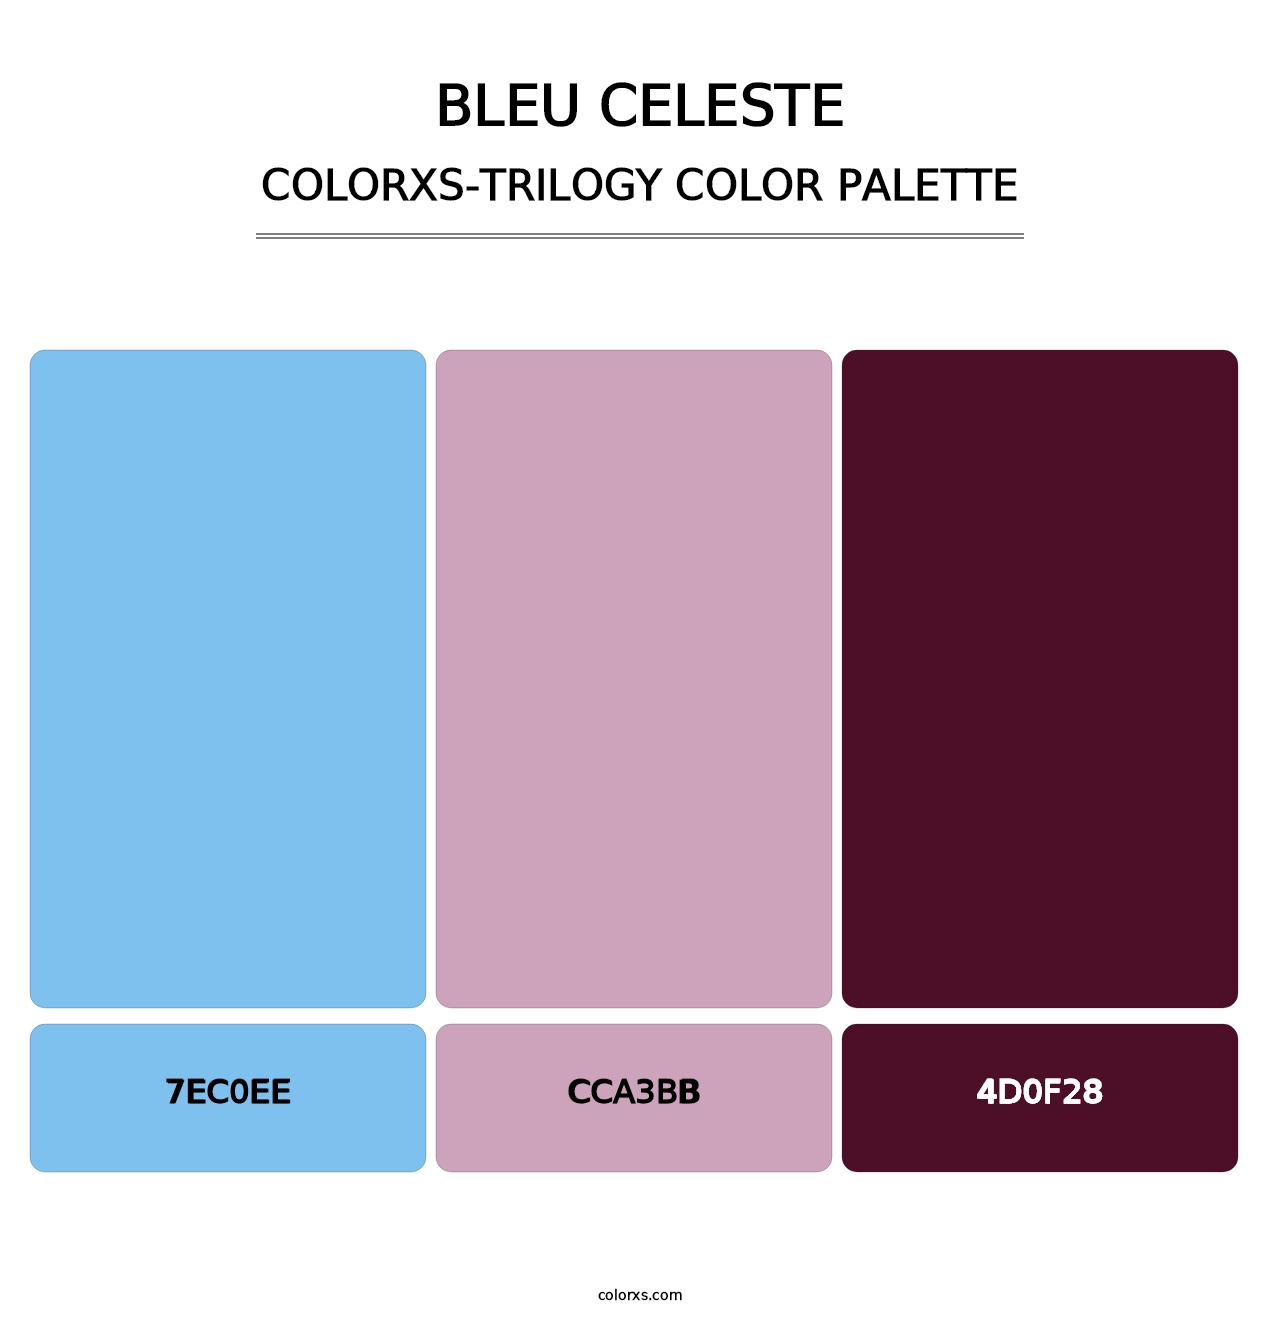 Bleu Celeste - Colorxs Trilogy Palette